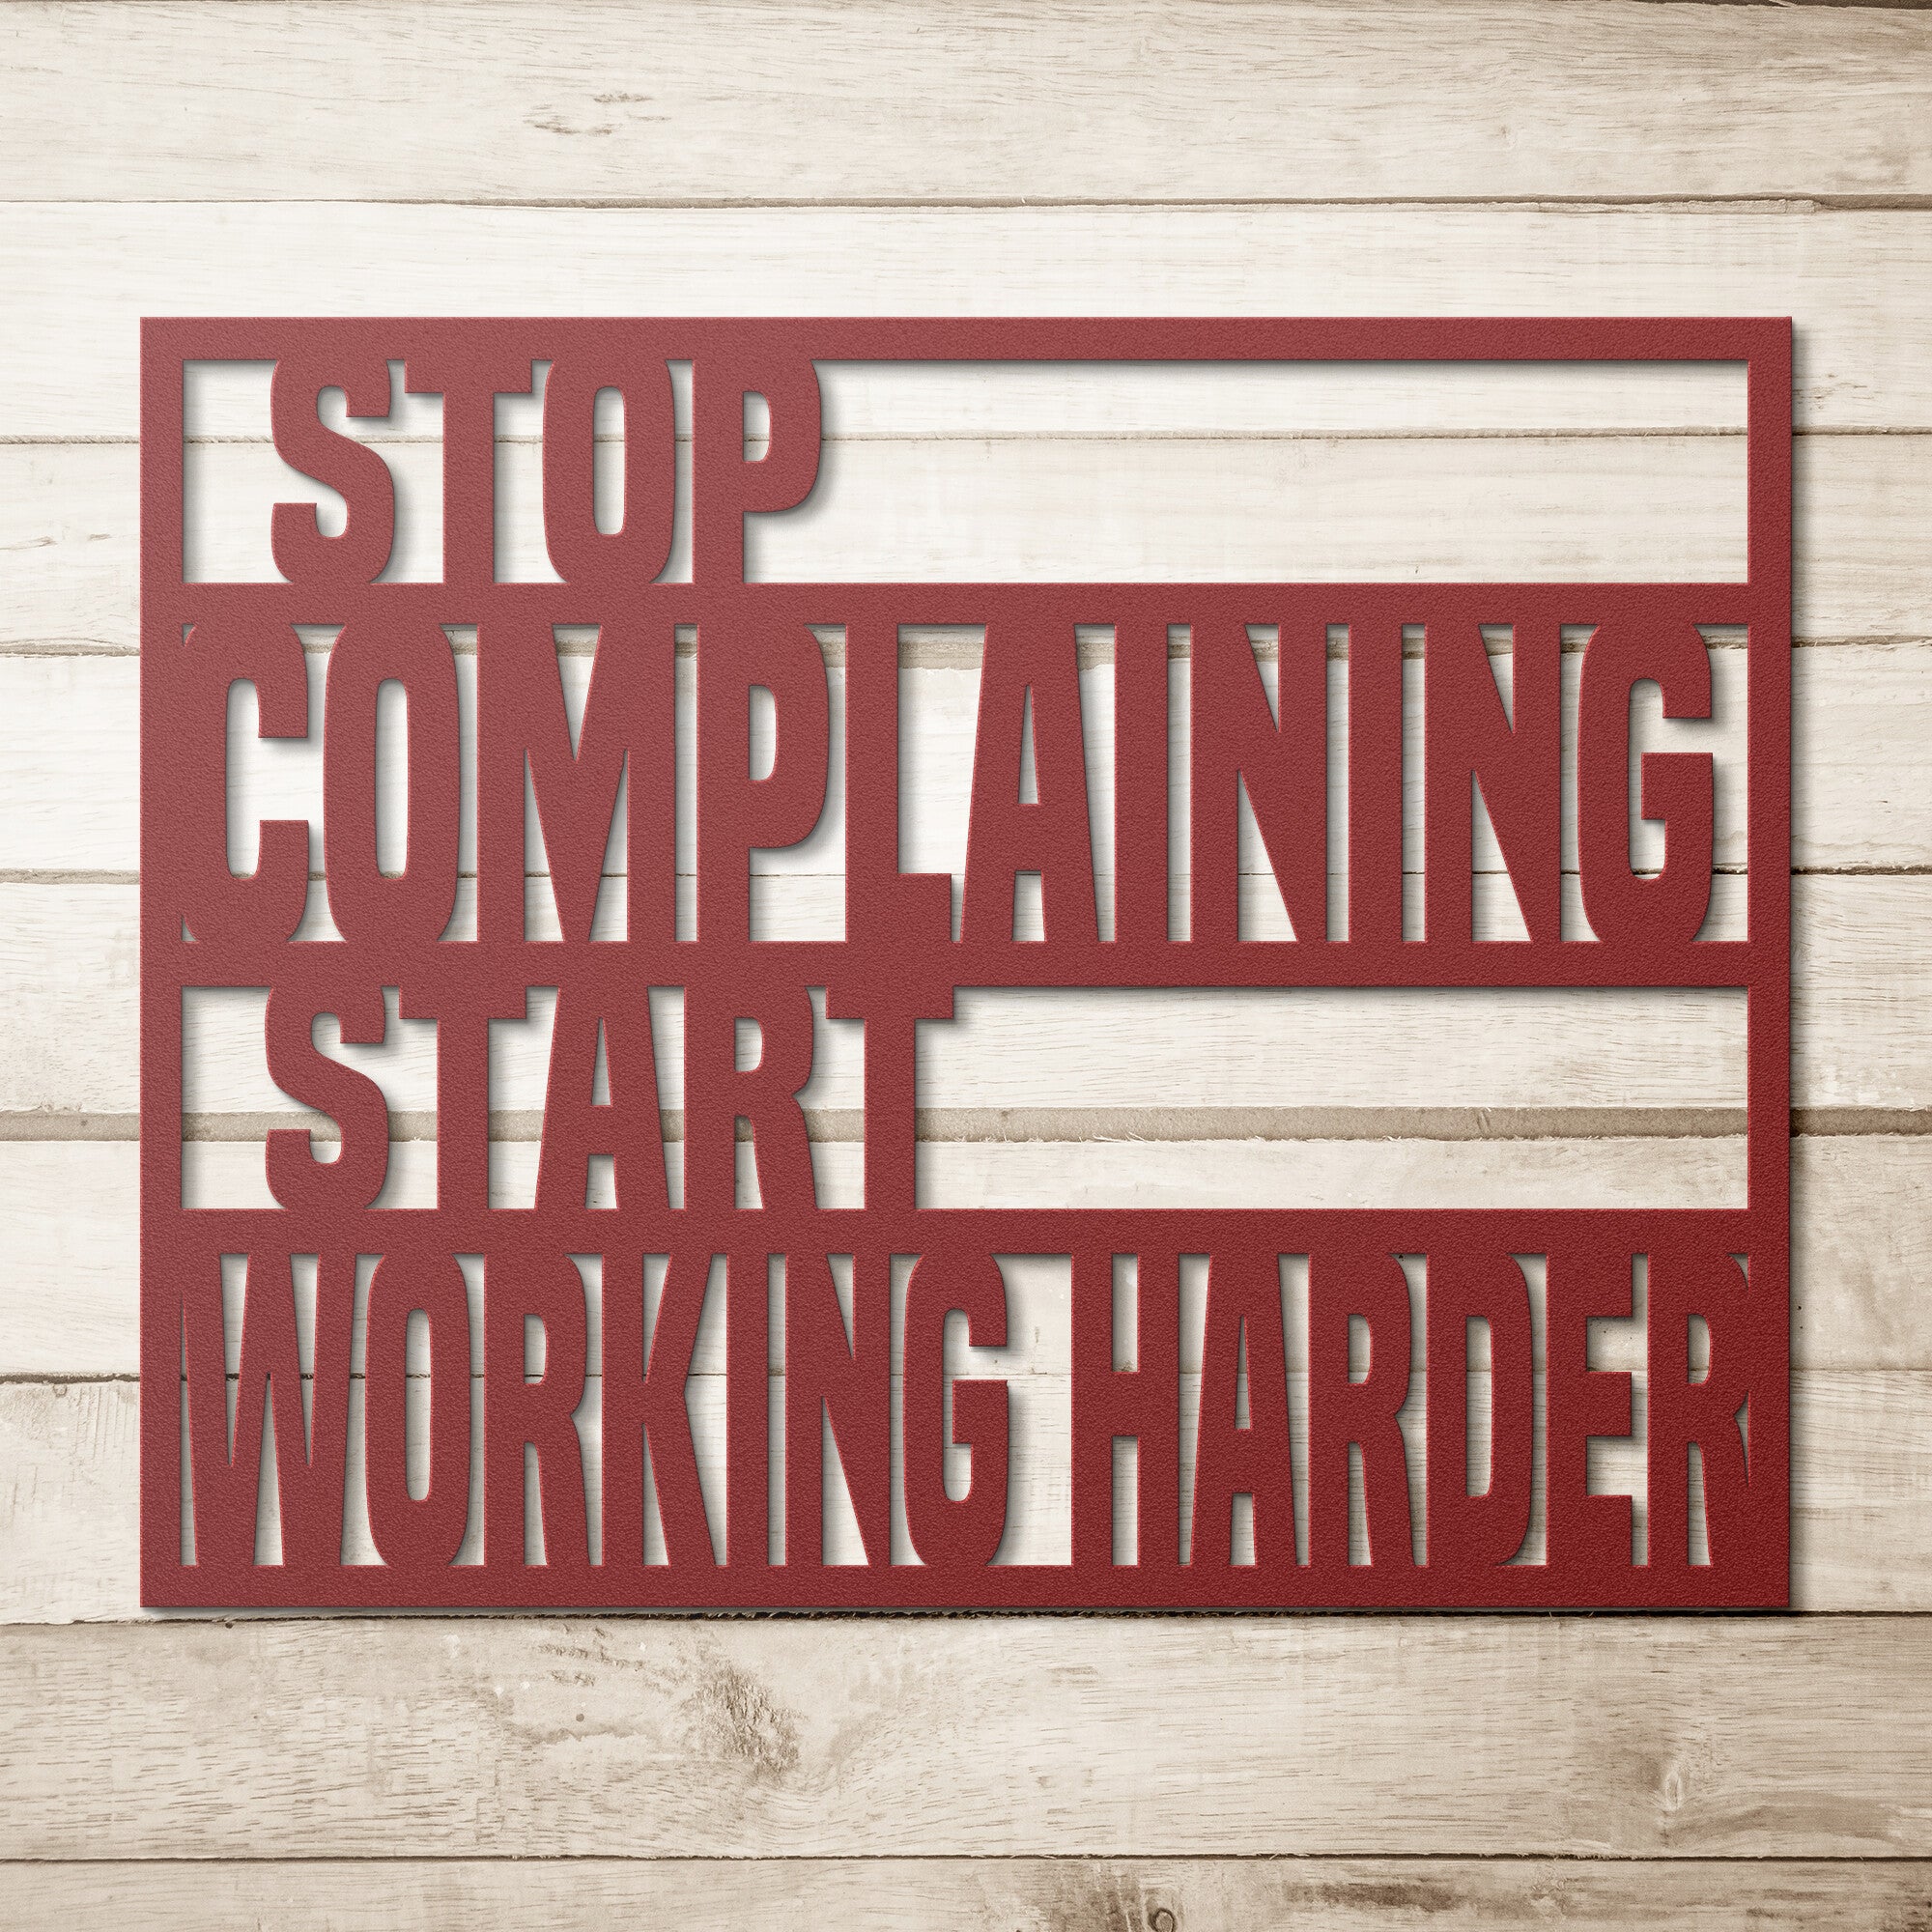 "Stop Complaining Start Working Harder" Metal Sign